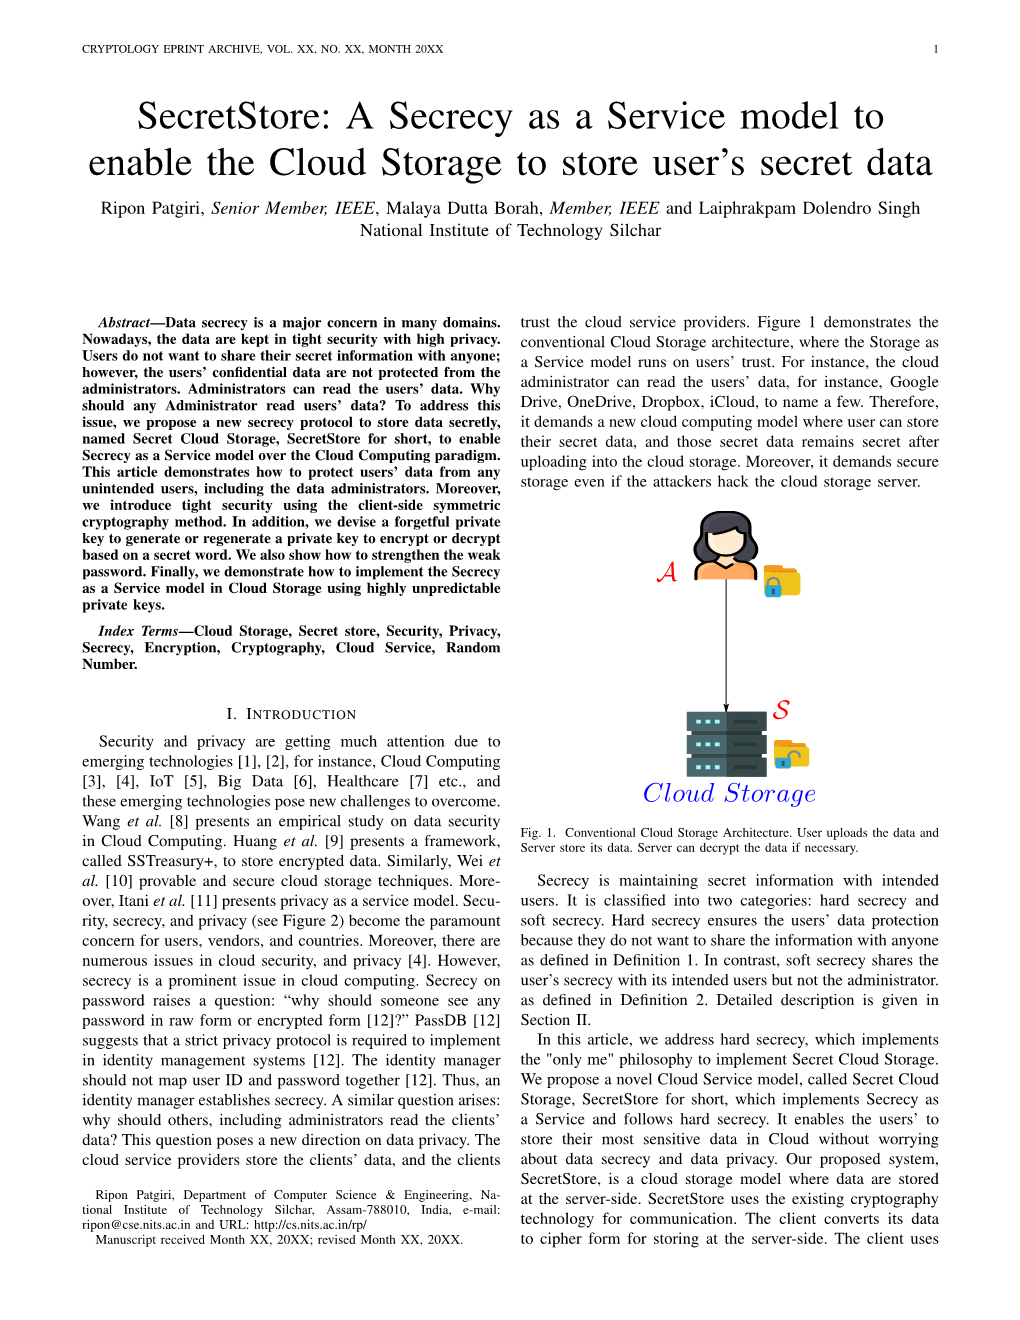 Secretstore: a Secrecy As a Service Model to Enable the Cloud Storage